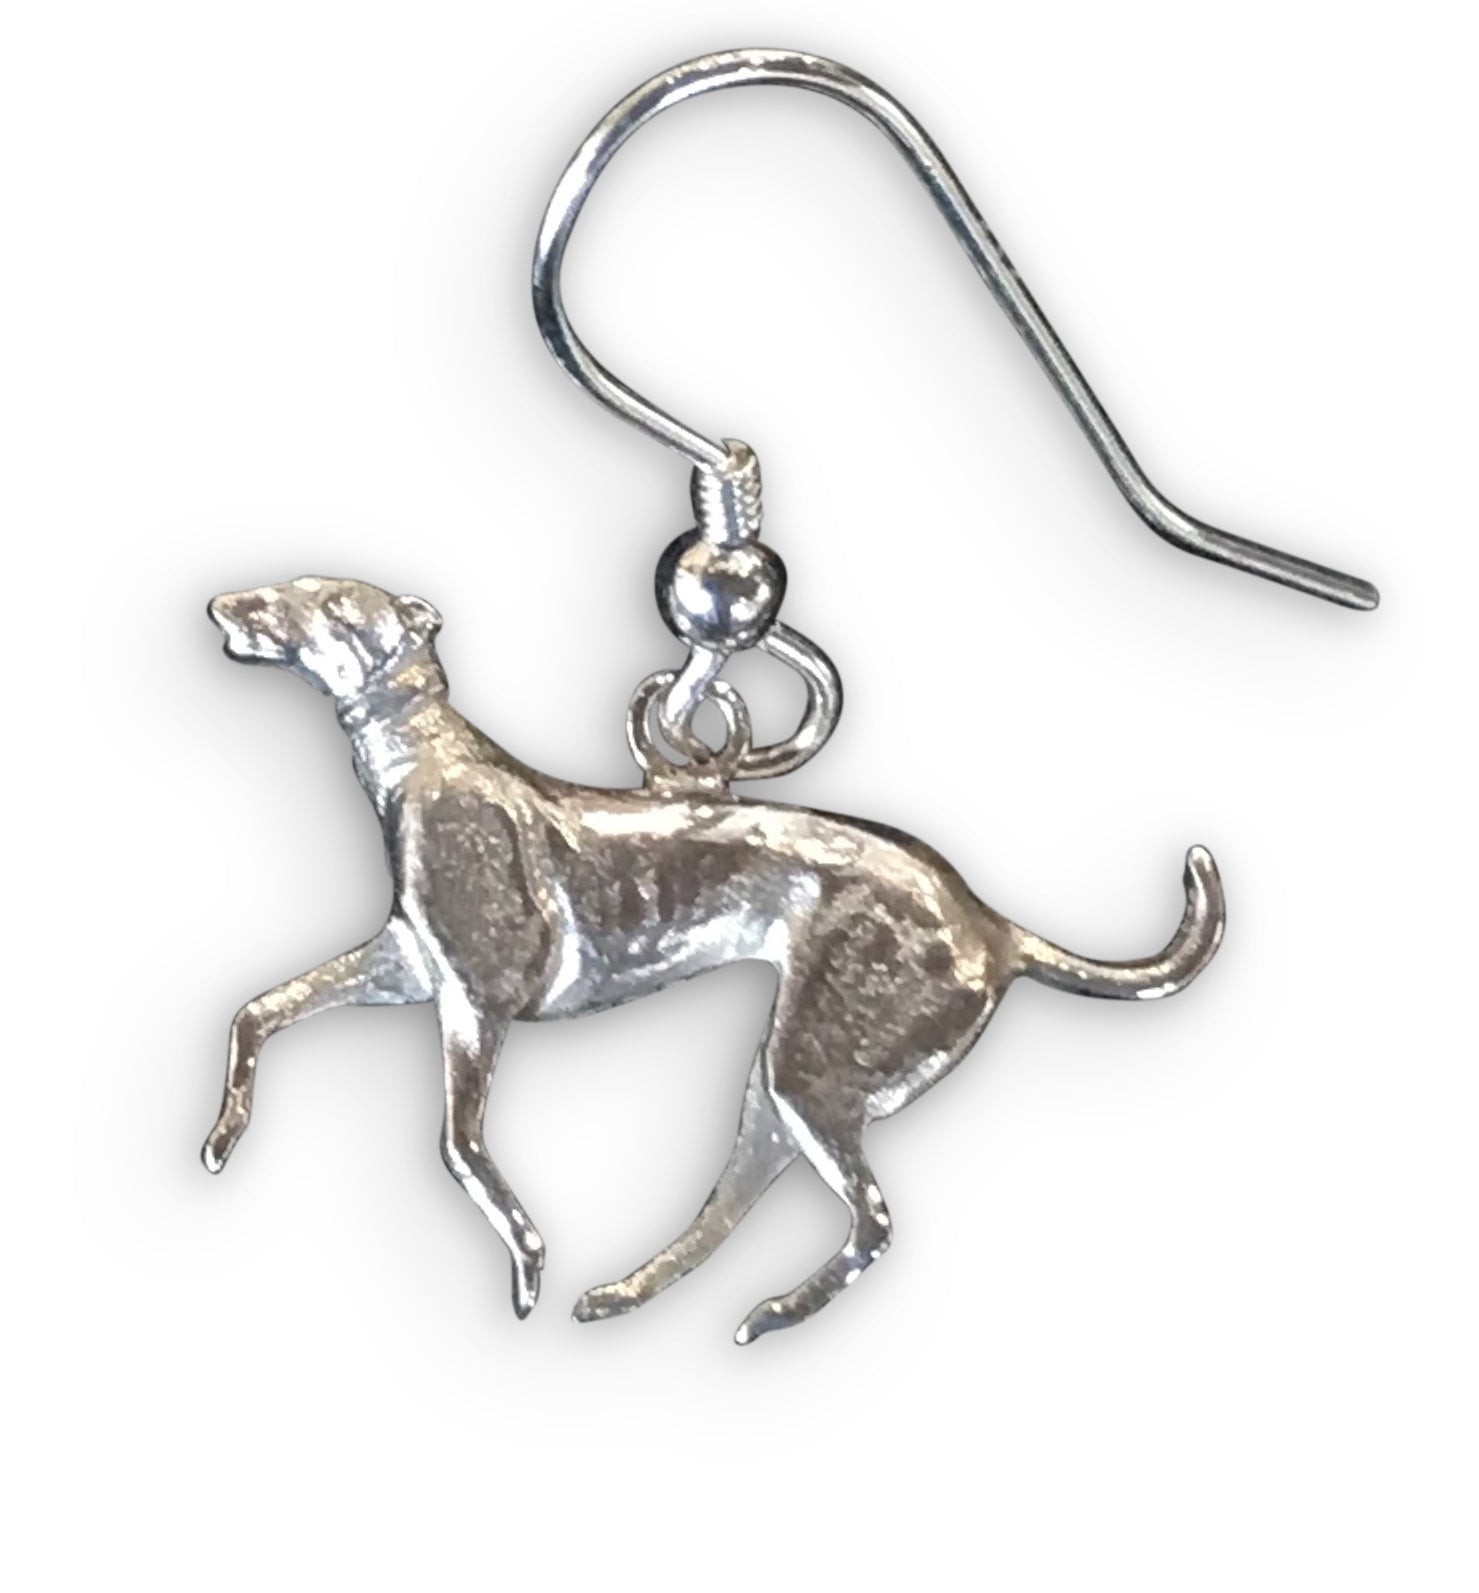 Greyhound Earrings by Paul Eaton Sculptor